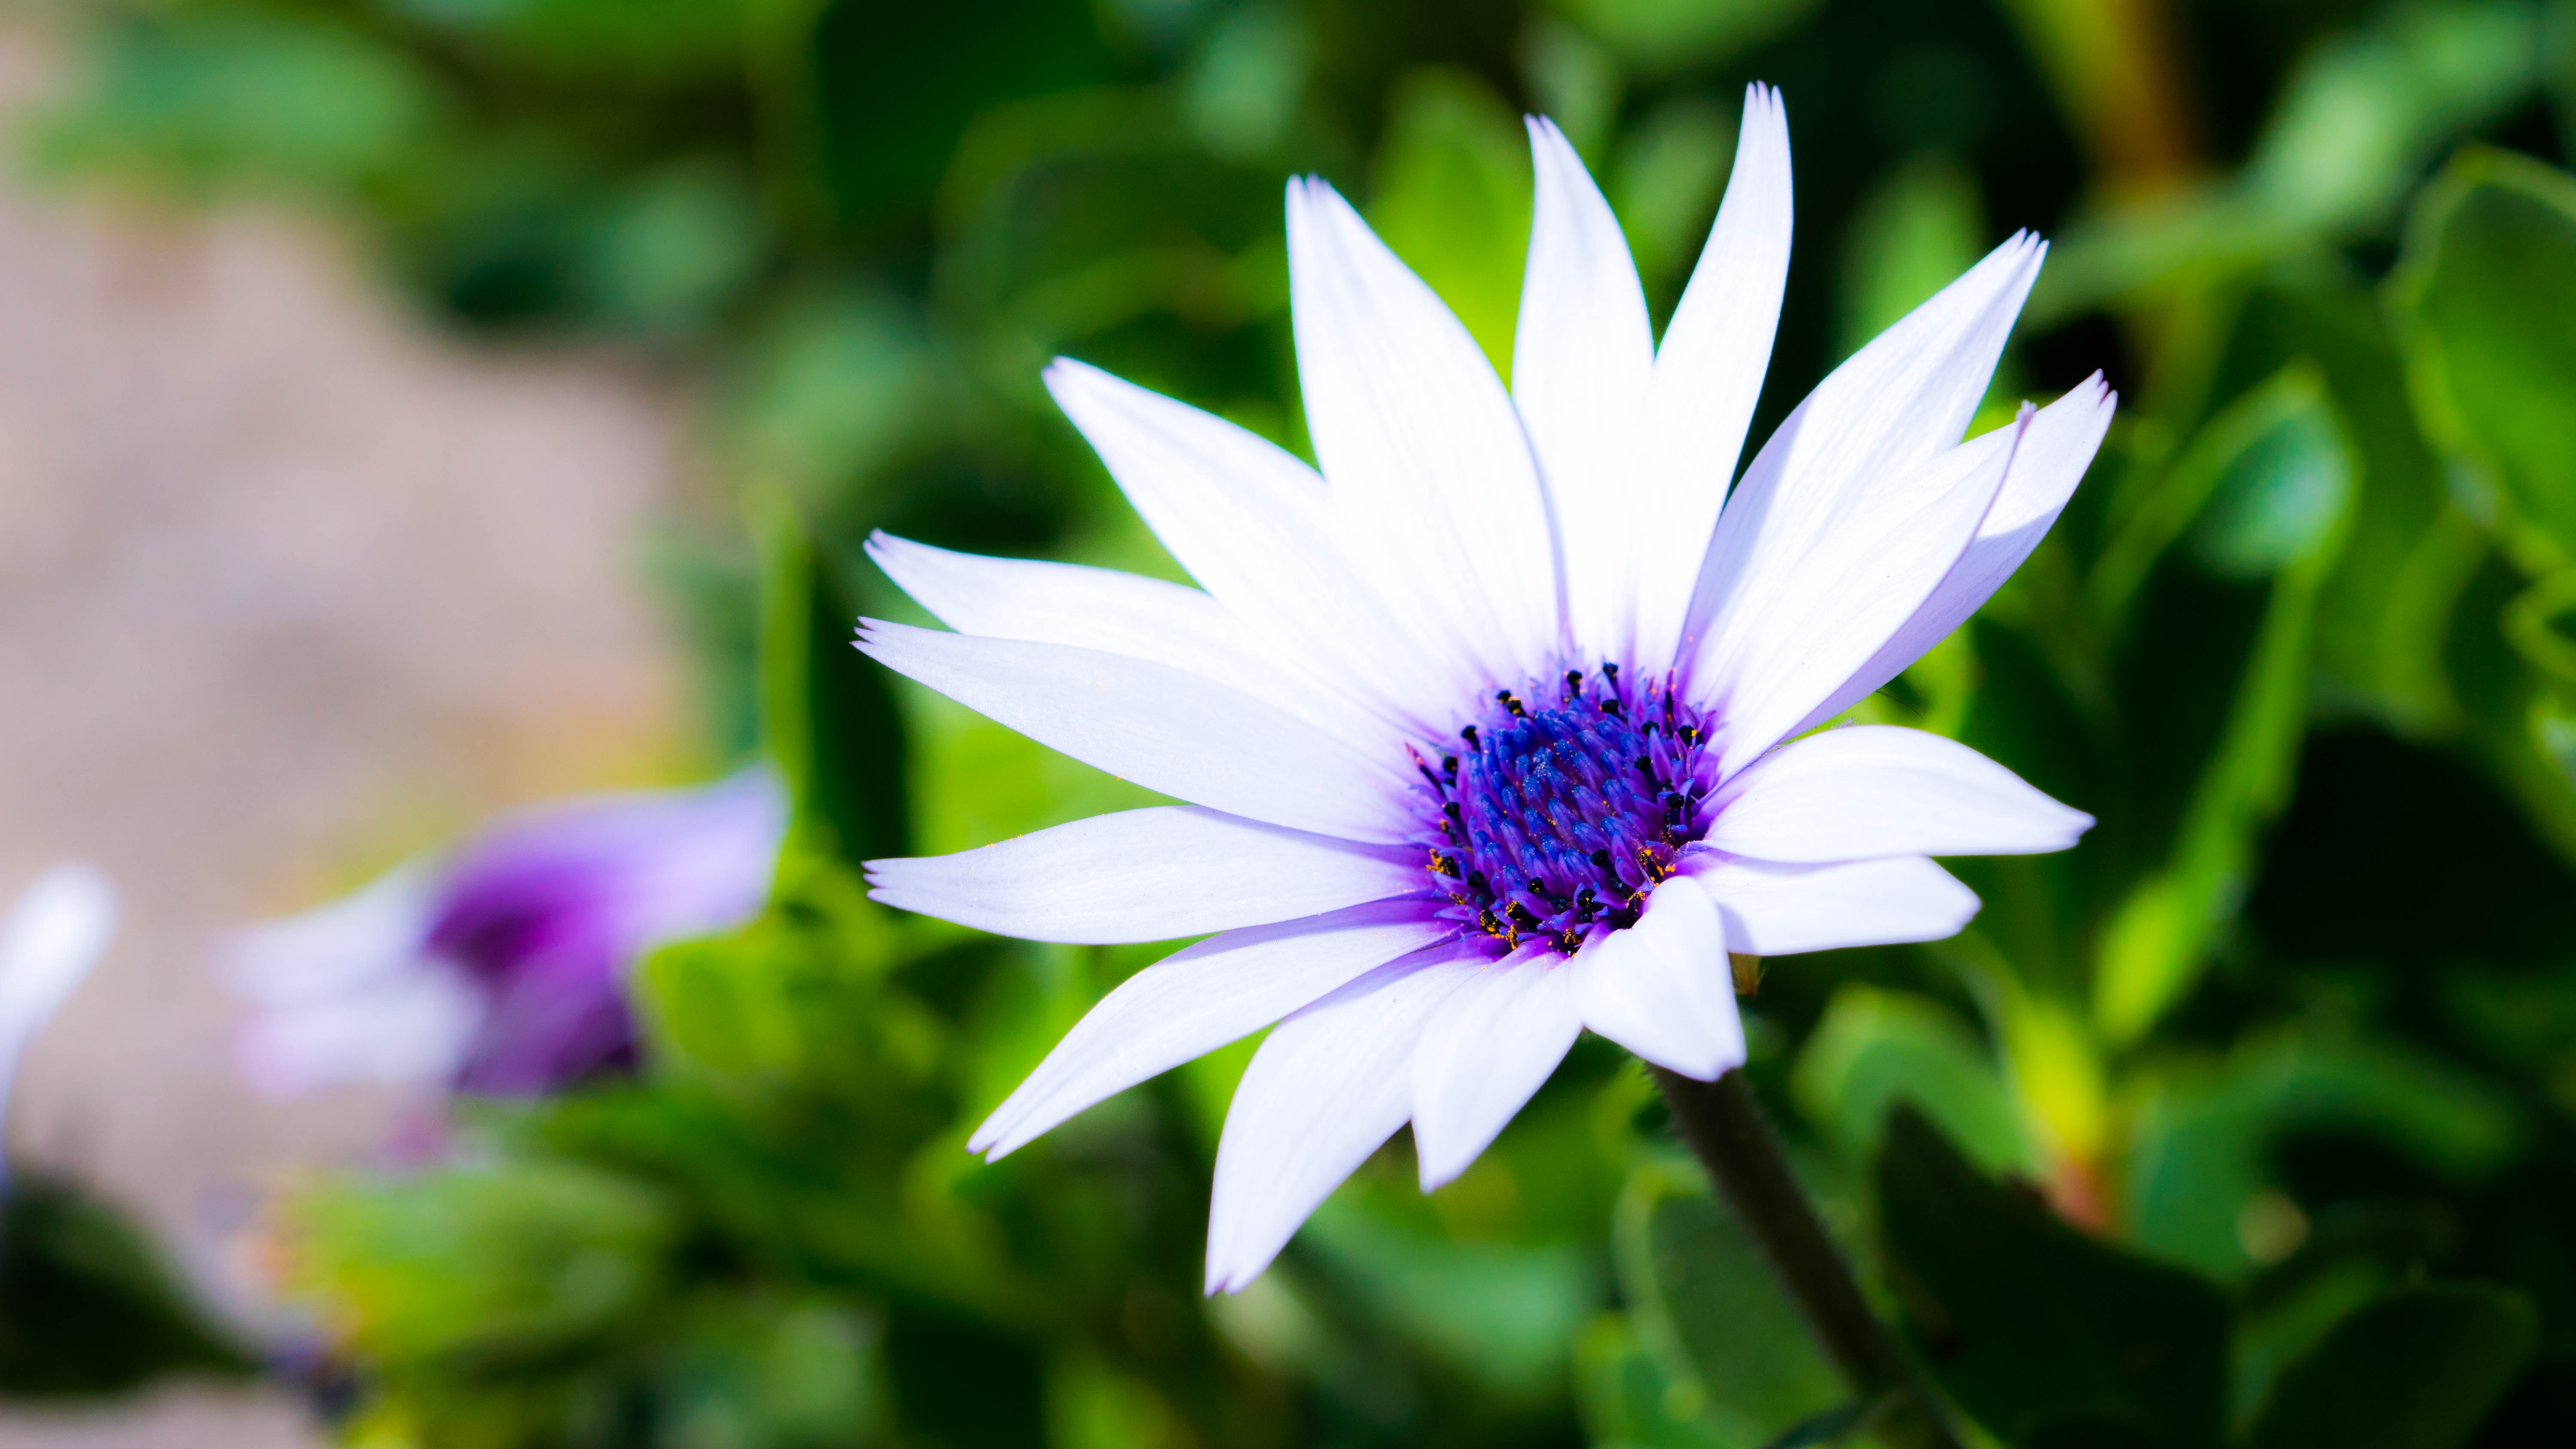 White and Blue Flower, Beautiful, Growth, Summer, Season, HQ Photo